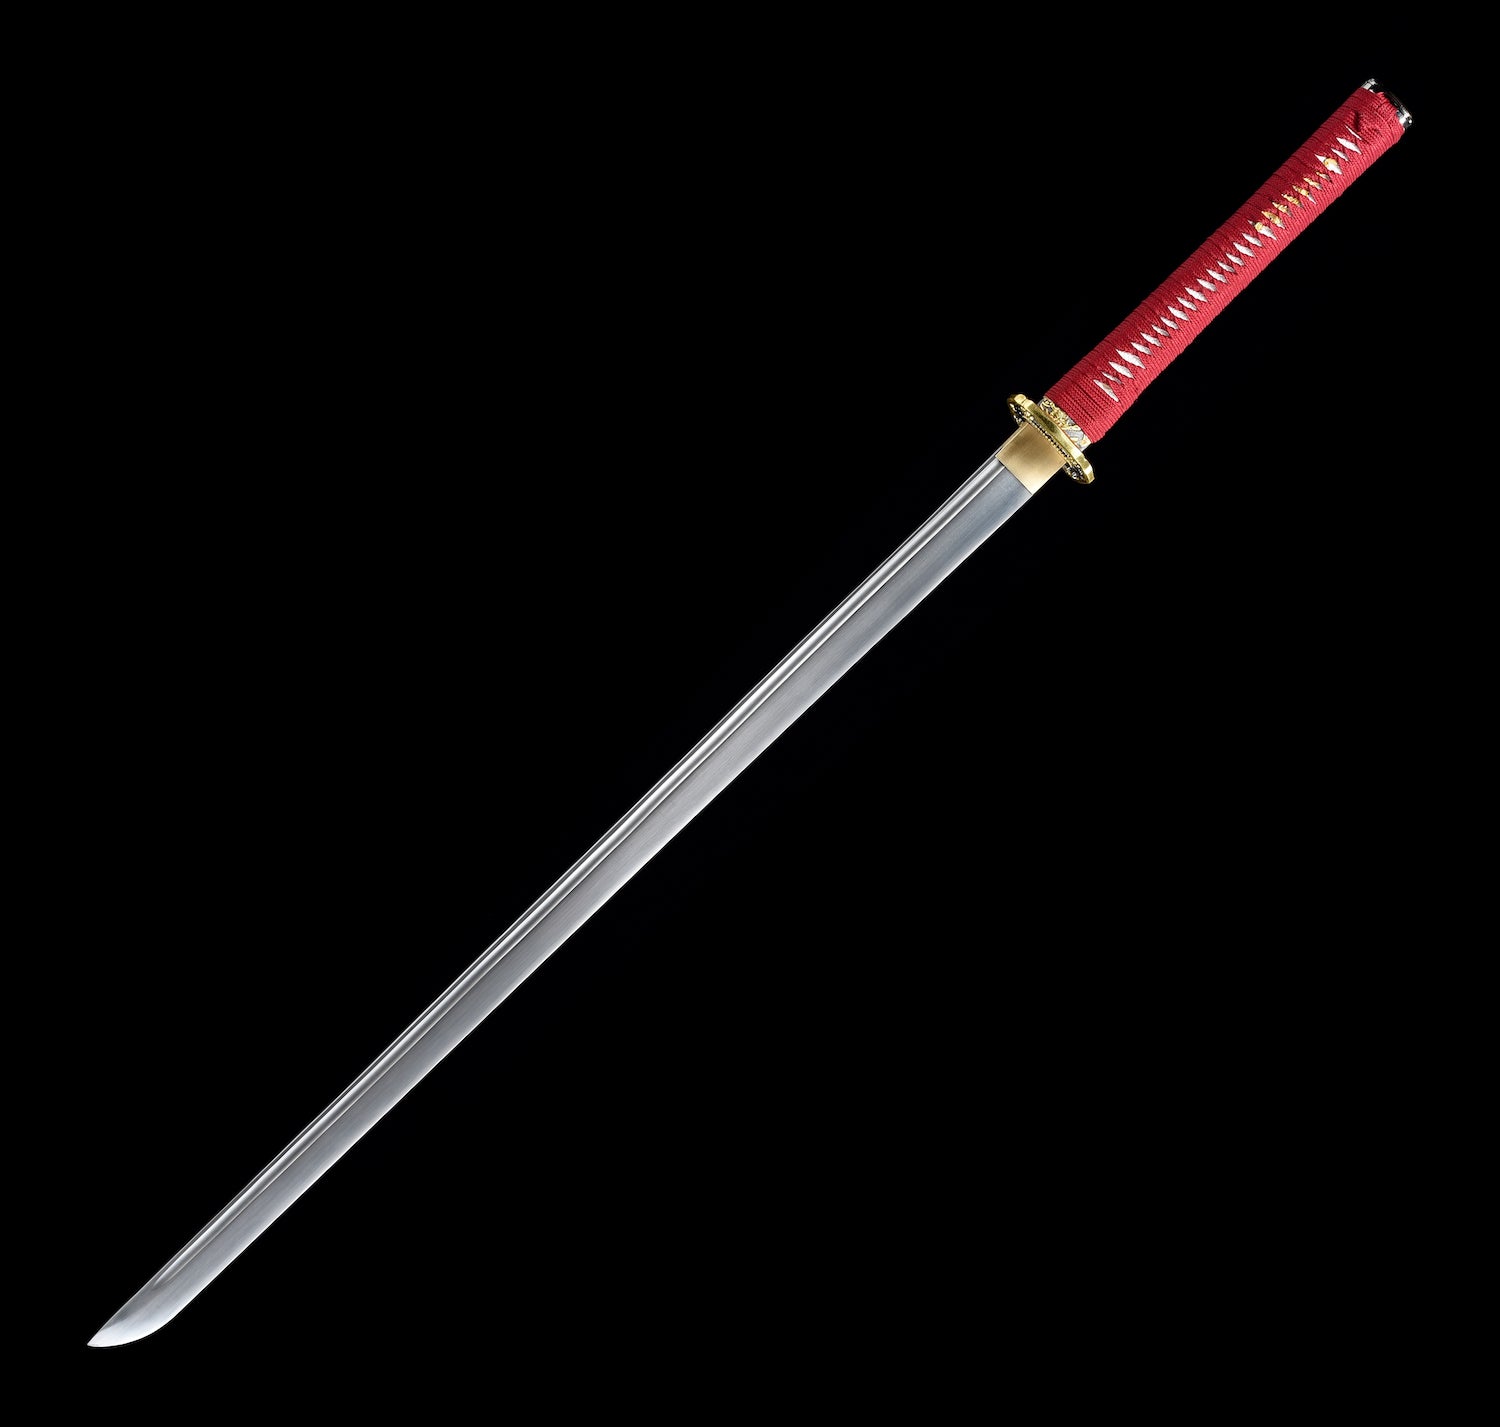 The Red Sakura Handmade Ninjato Manganese Steel-Romance of Men